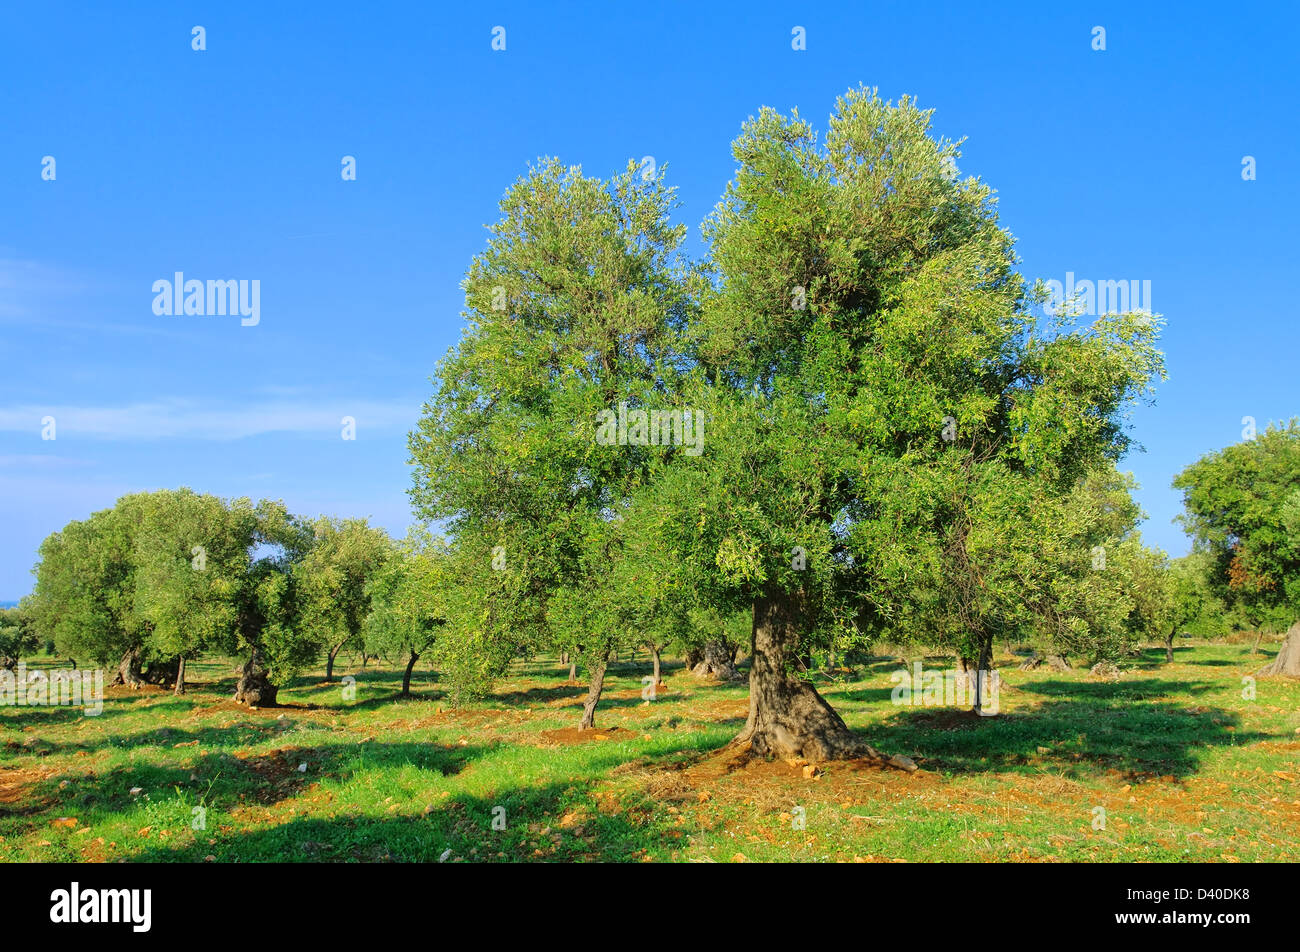 Olivenbaum Stamm - olive tree trunk 19 Stock Photo